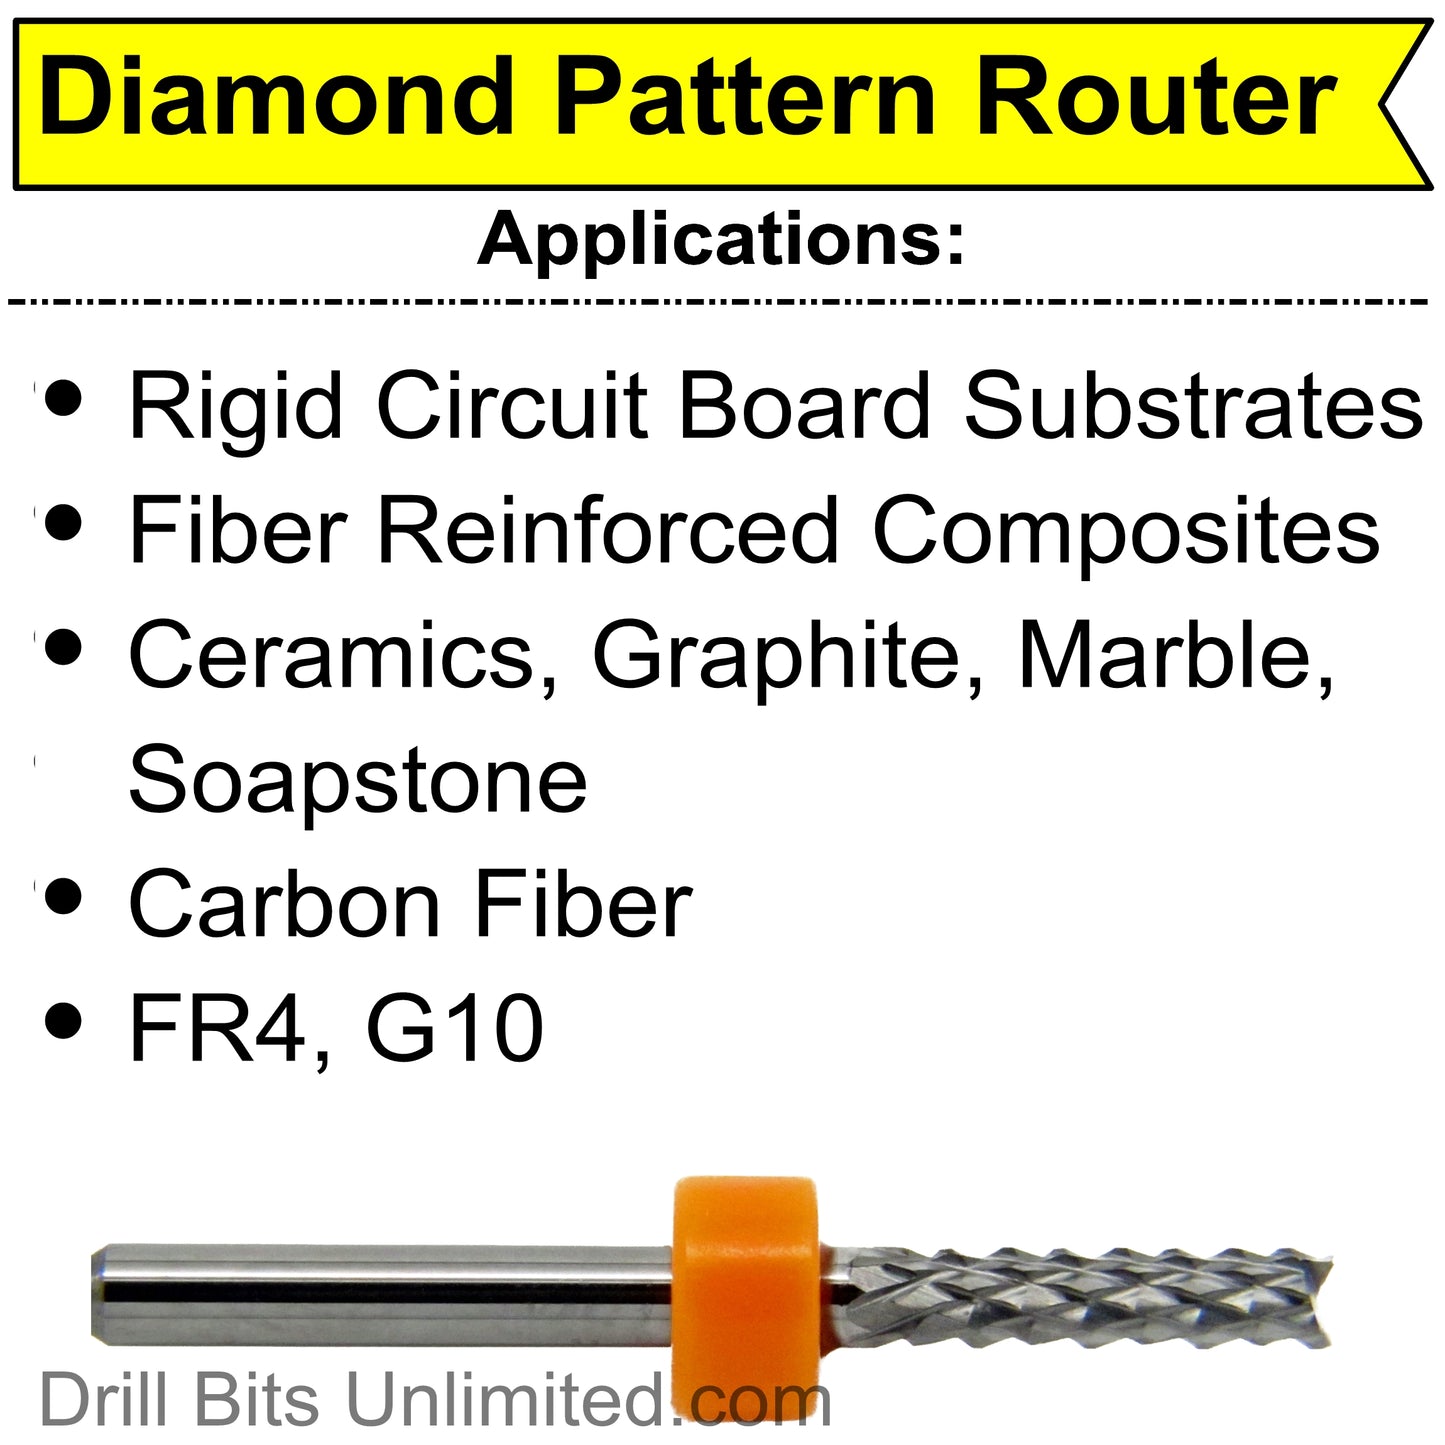 .0512" 1.30mm x .300" LOC - Diamond Pattern Carbide Router Bit - Fishtail Tip  R126